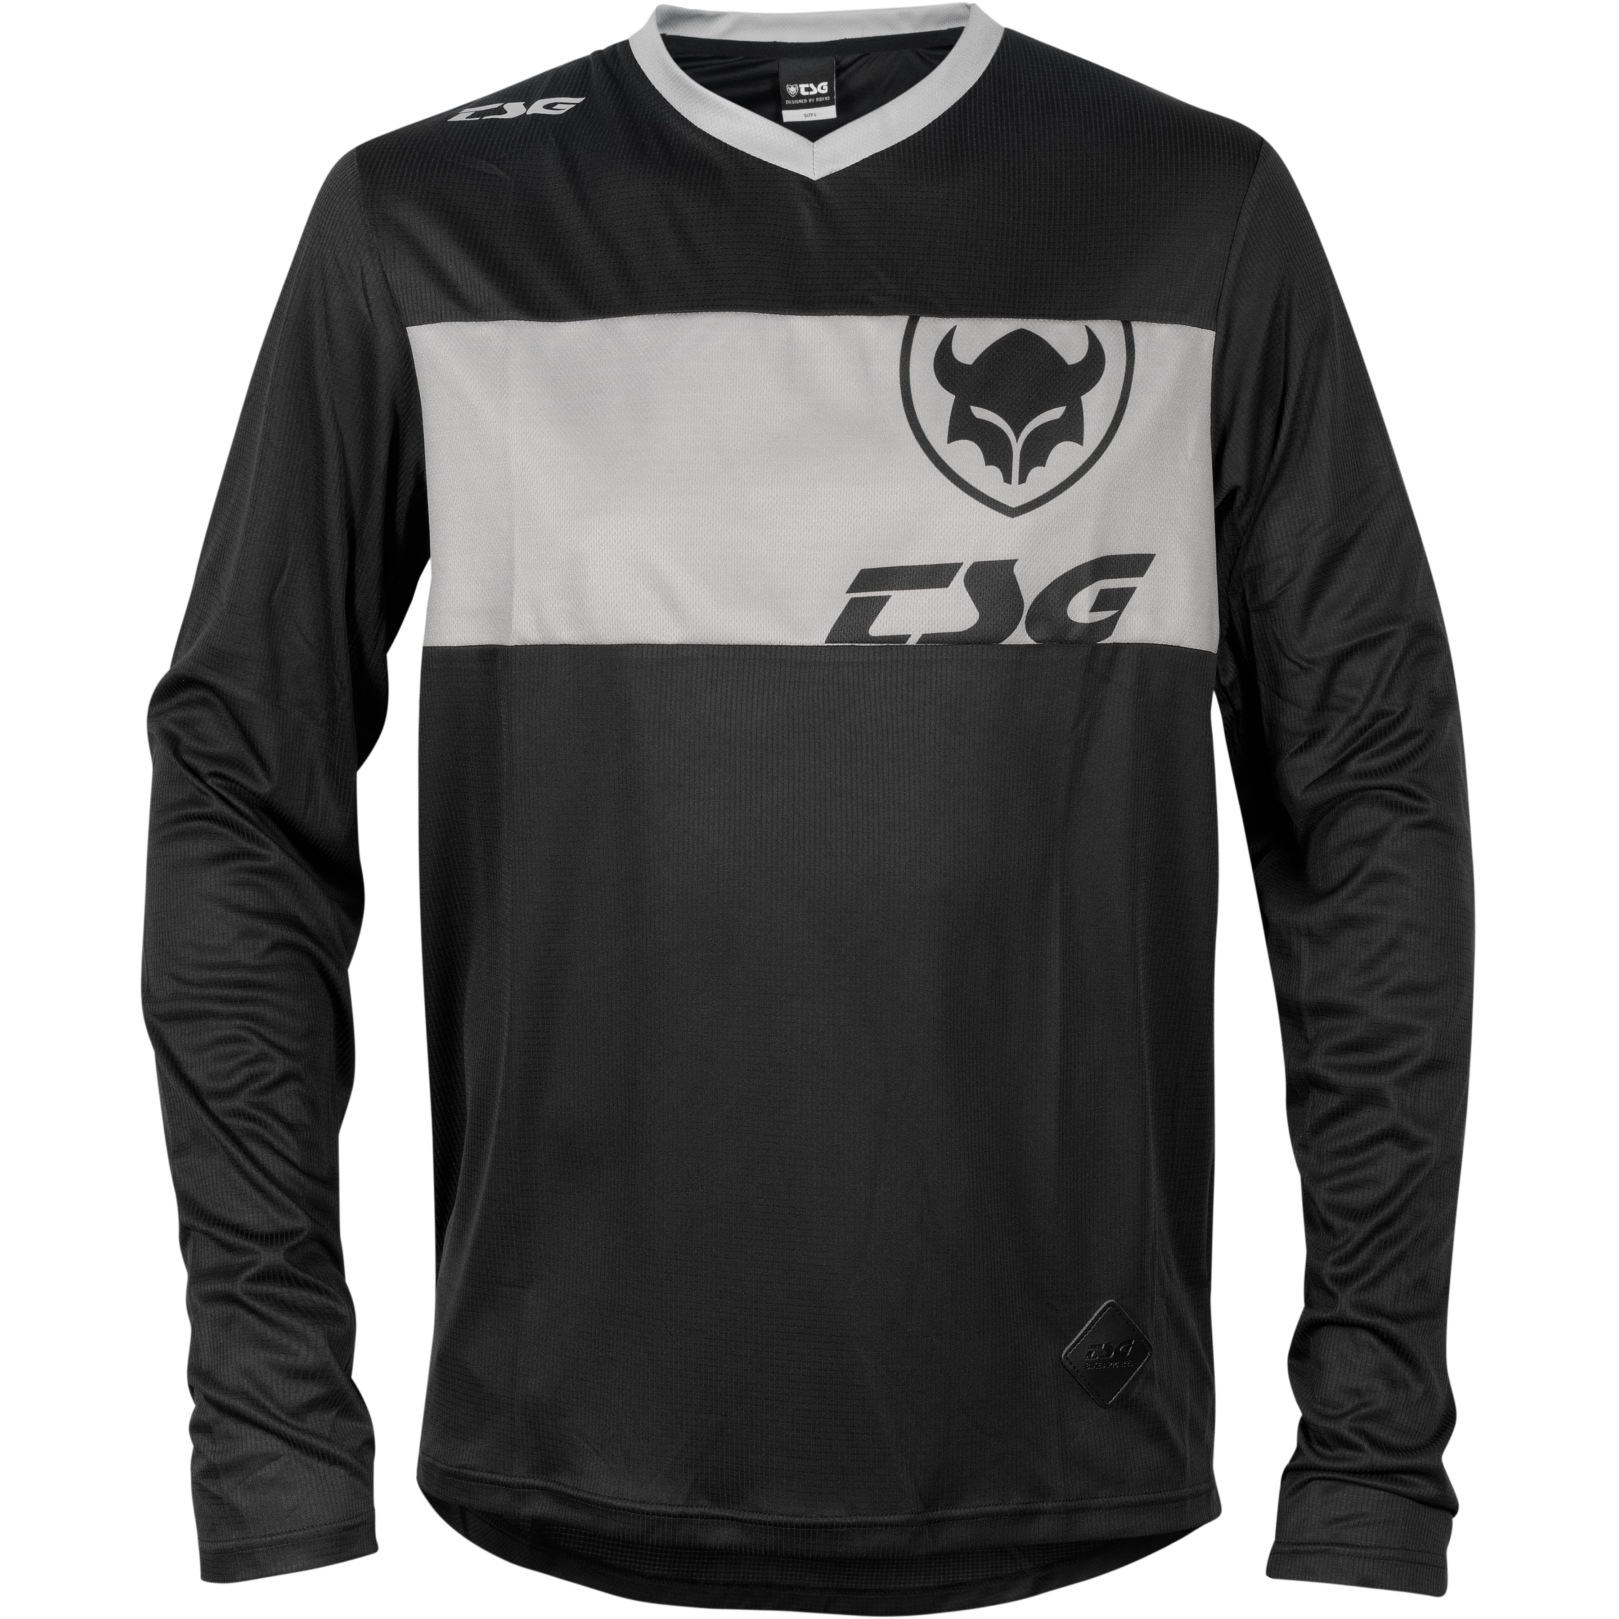 Productfoto van TSG Waft Shirt met Lange Mouwen - black grey